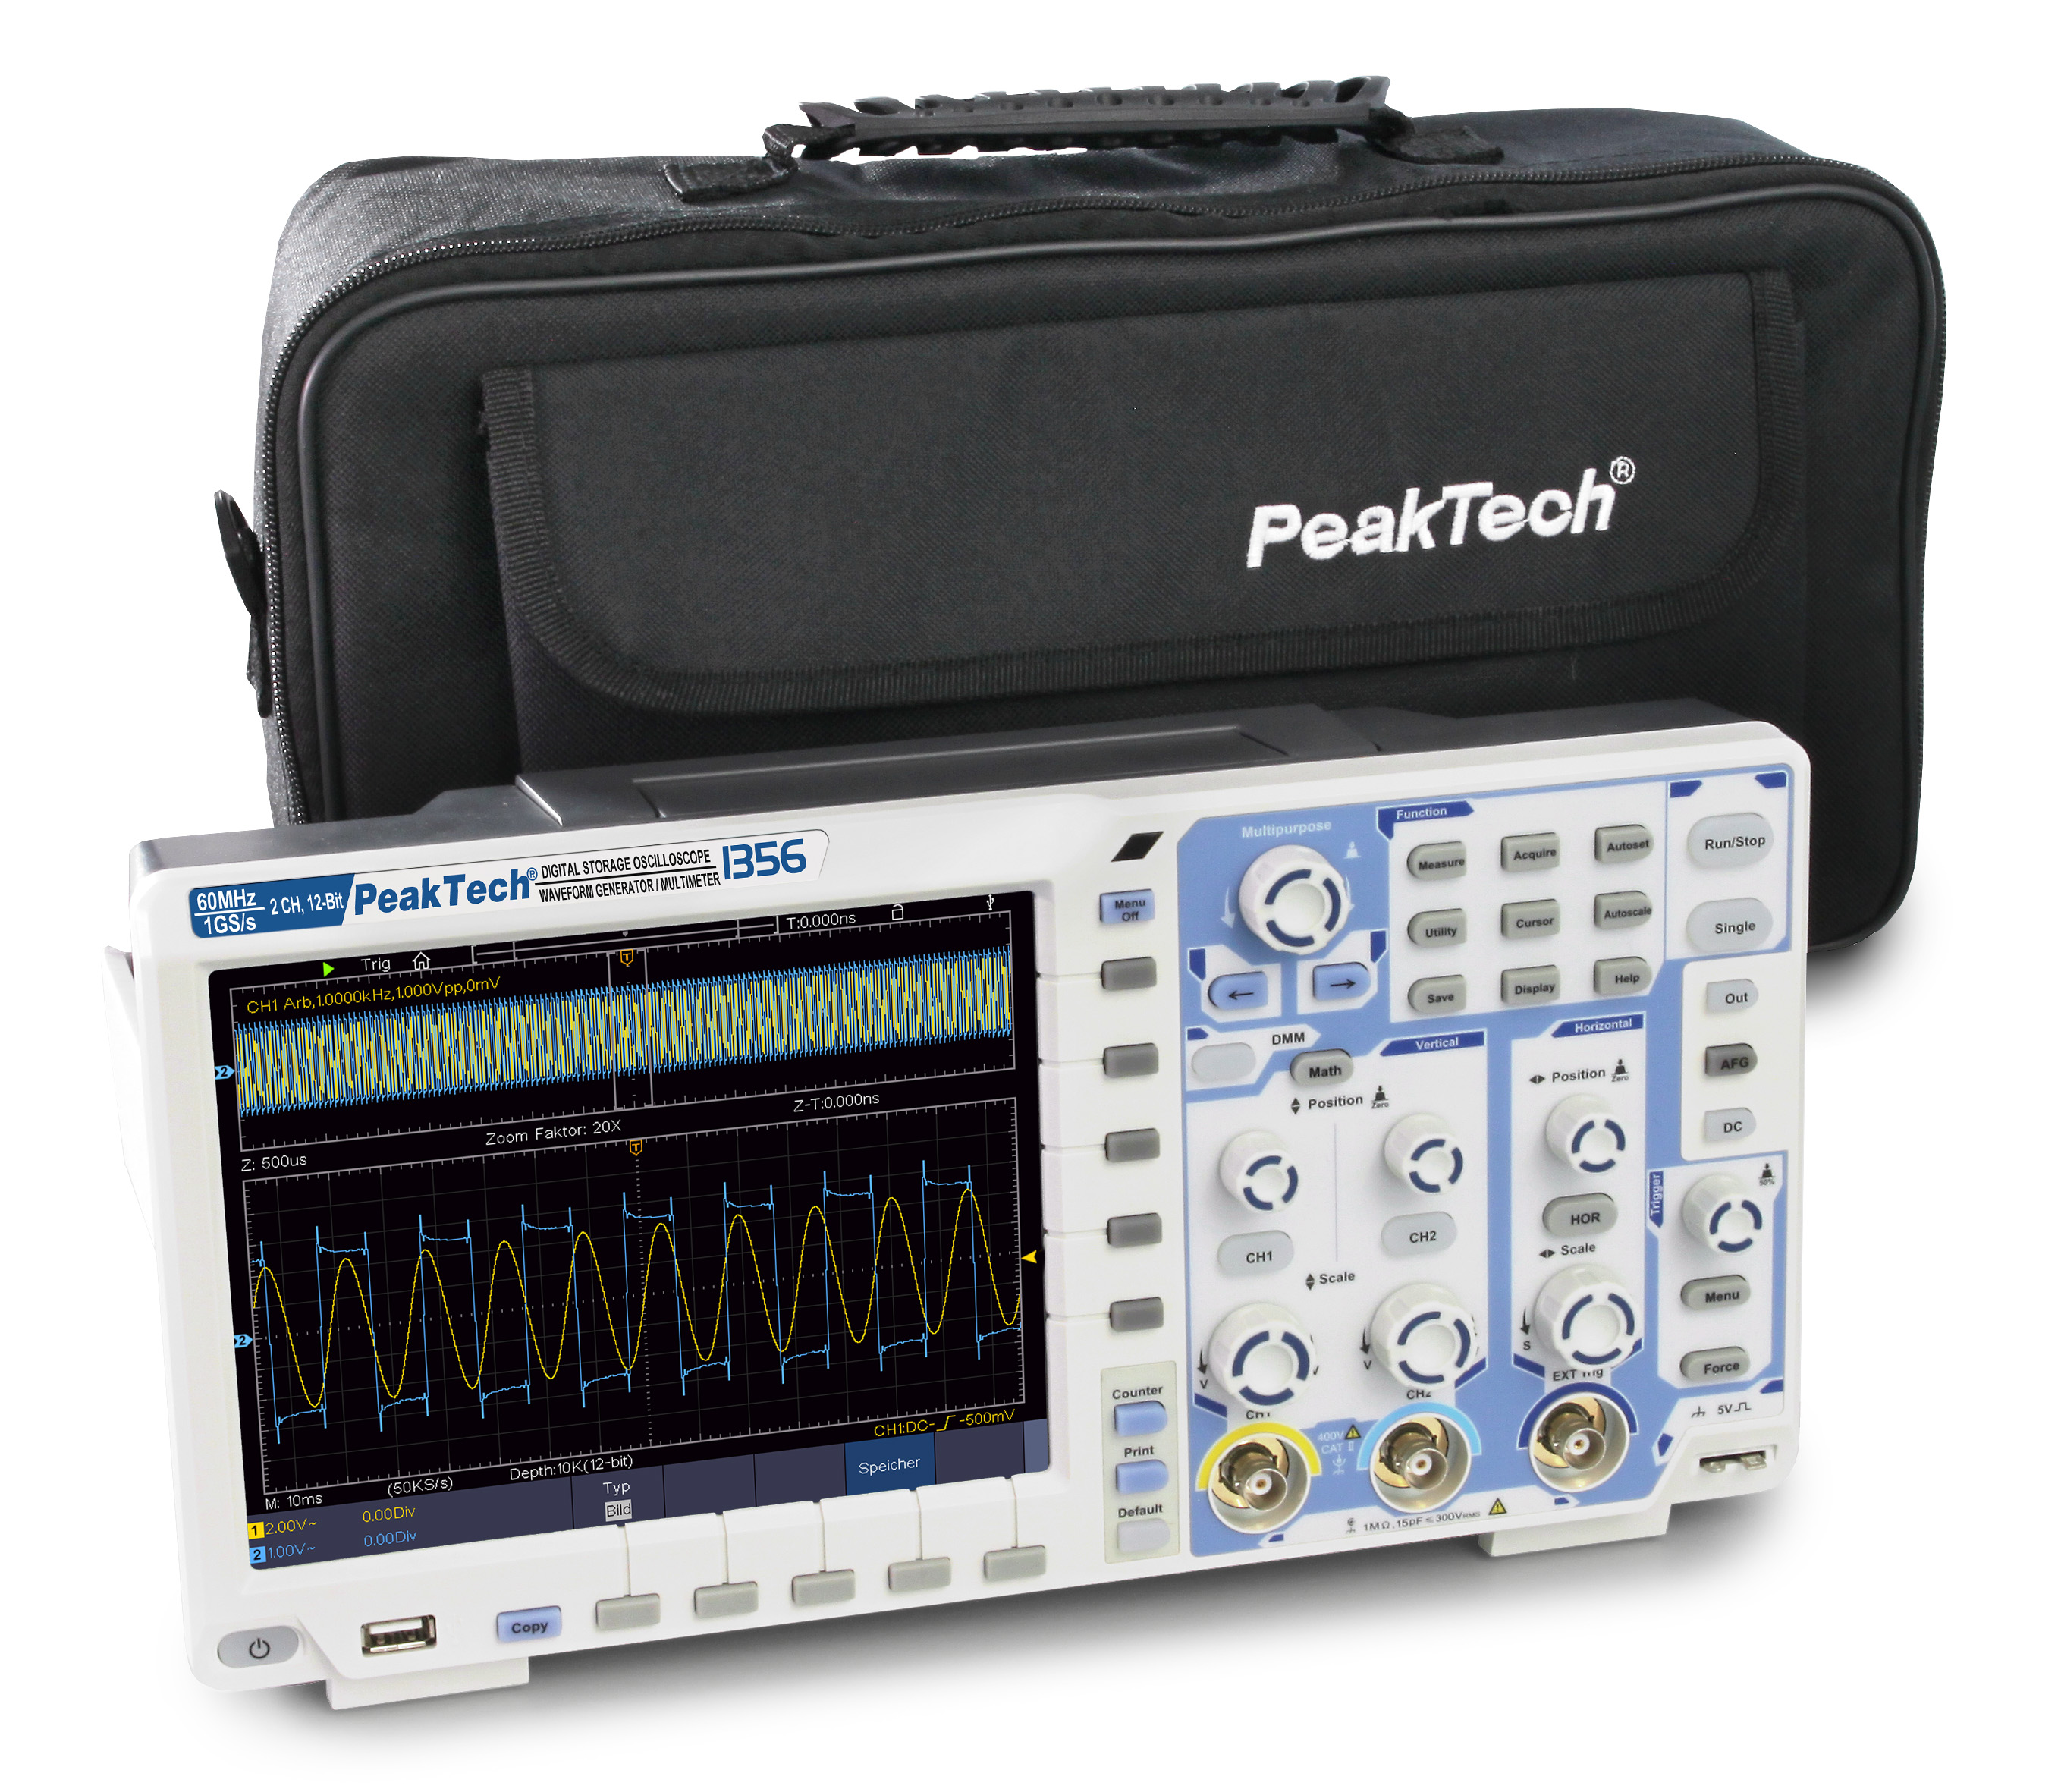 «PeakTech® P 1356» 60 MHz / 2 CH, 1 GS/s touchscreen oscilloscope